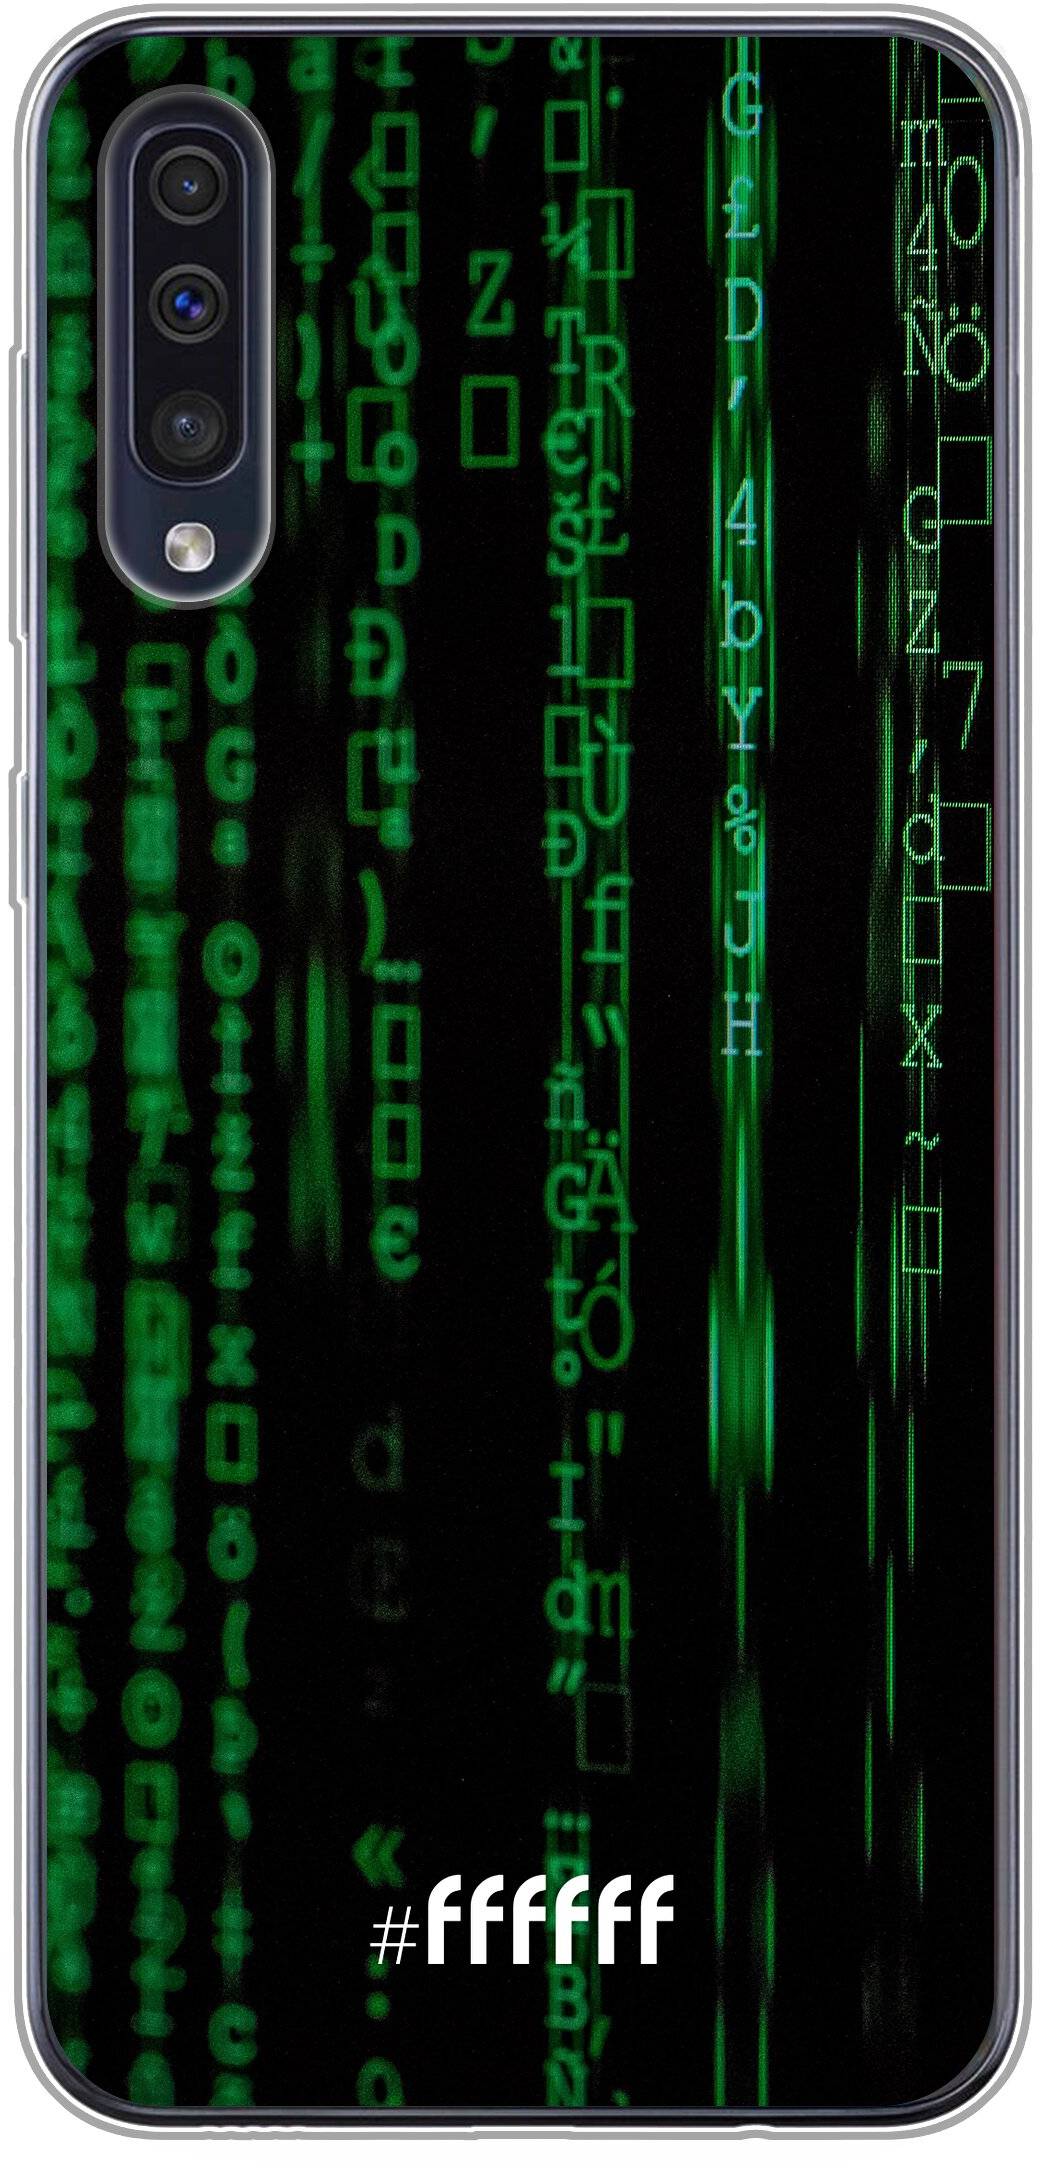 Hacking The Matrix Galaxy A50